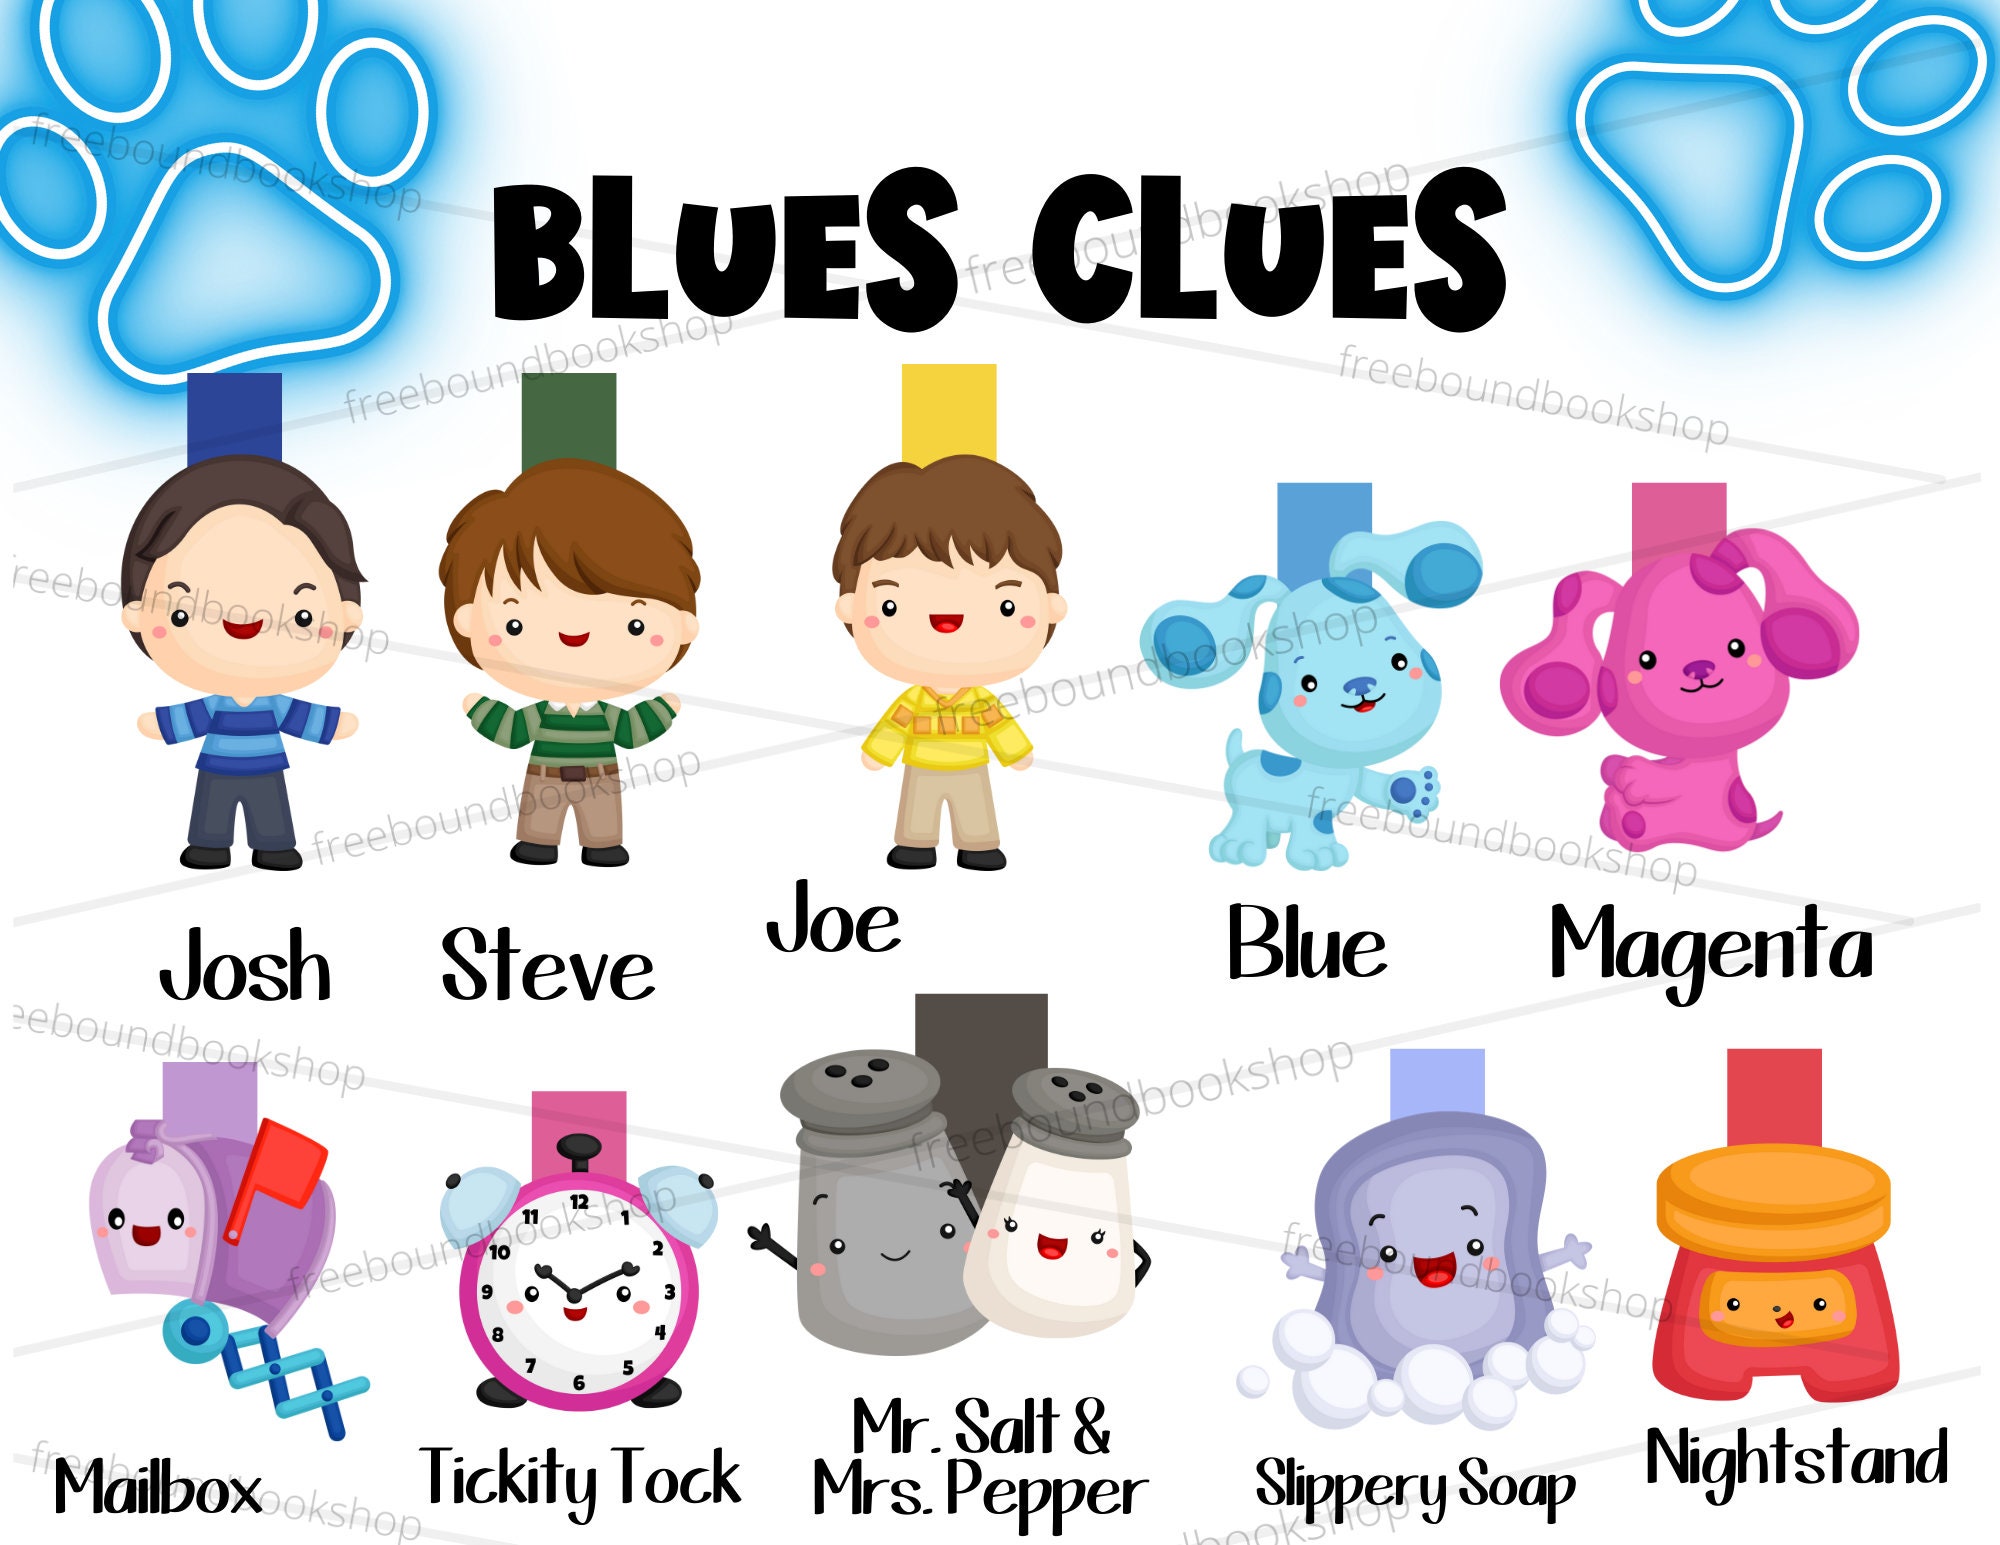 blues clues characters magenta